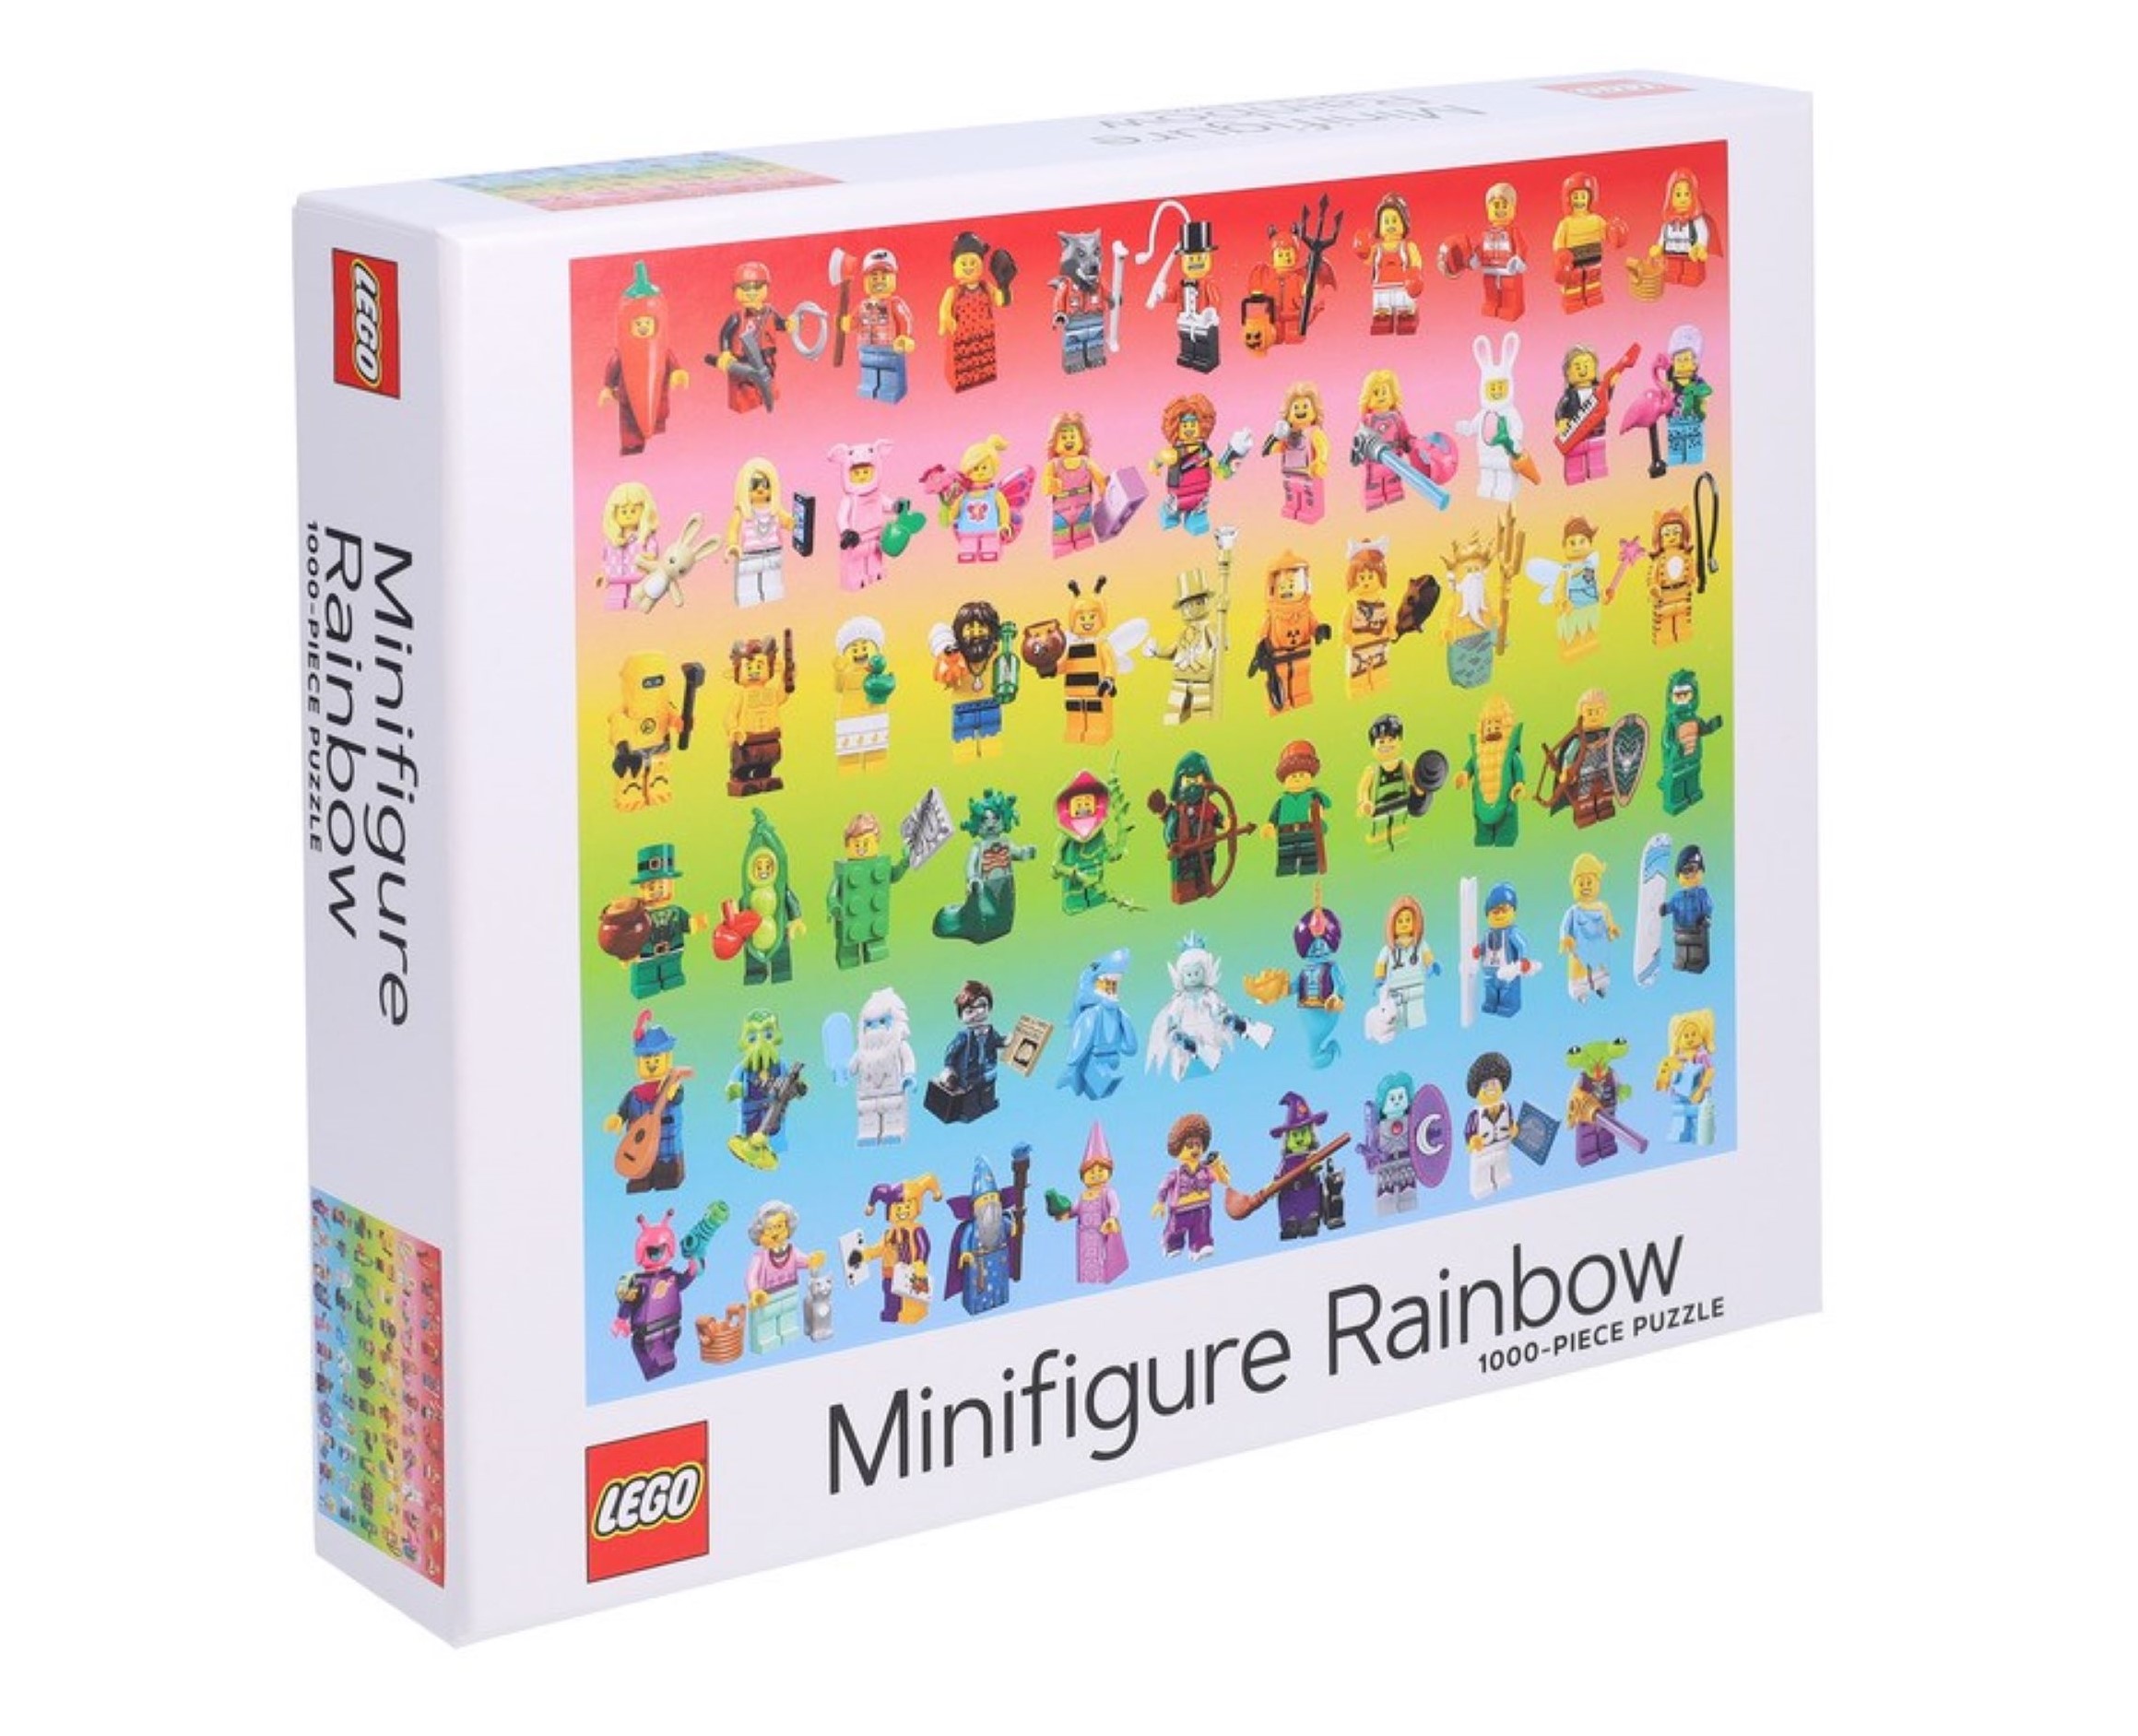 Minifigure Rainbow 1,000-Piece Puzzle 5007643, Minifiguren